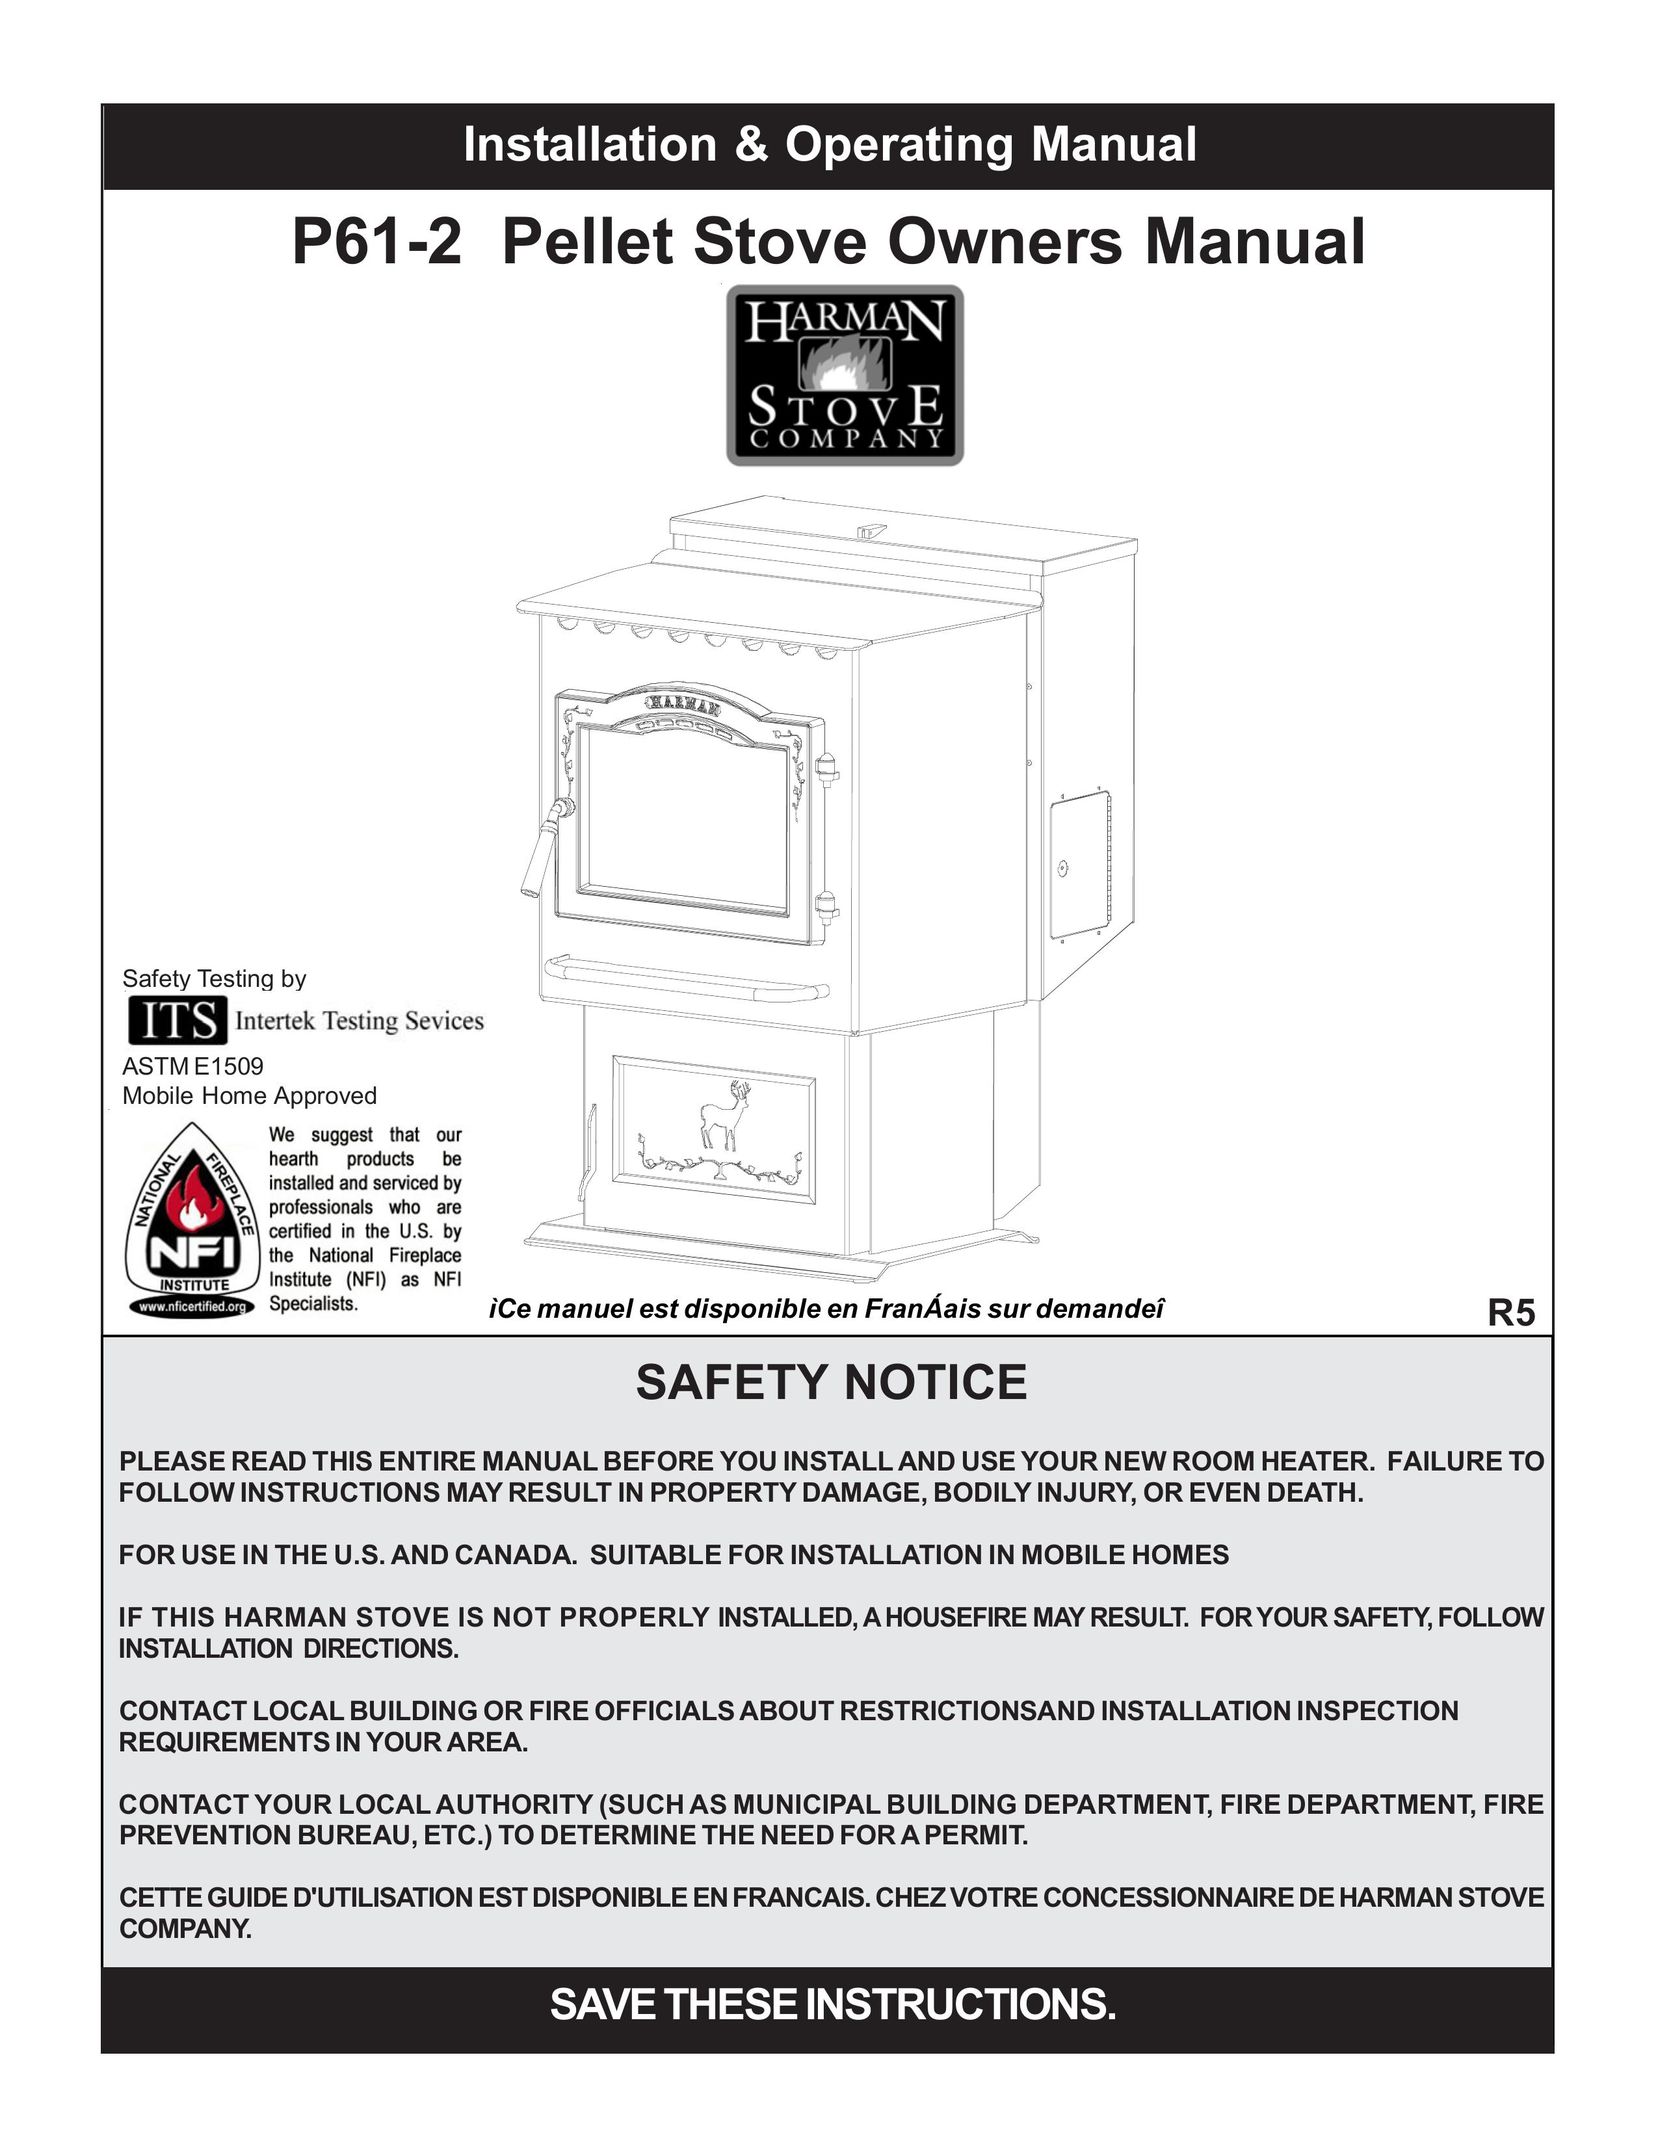 Harman Stove Company P61-2 Stove User Manual